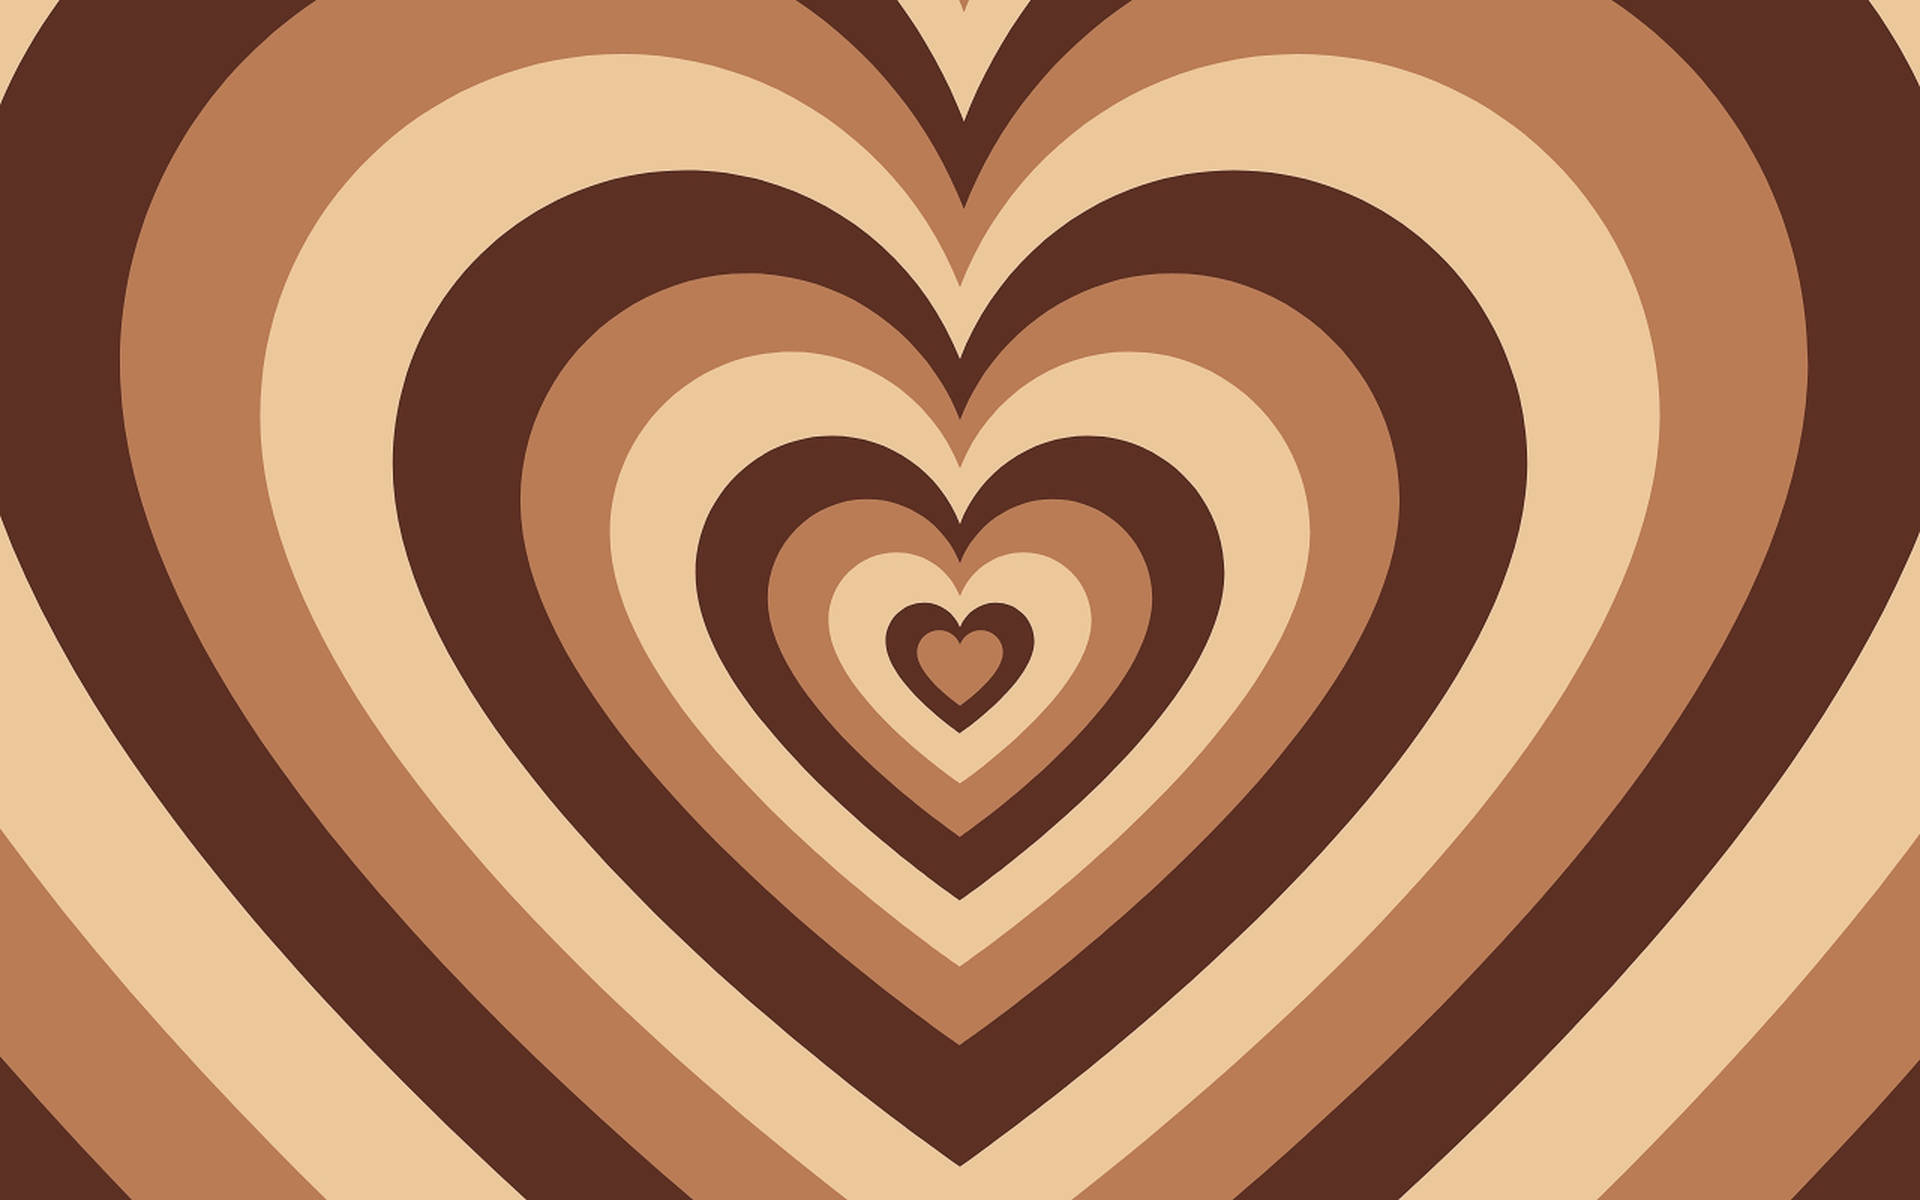 Free Heart Wallpaper Downloads, [800+] Heart Wallpapers for FREE |  